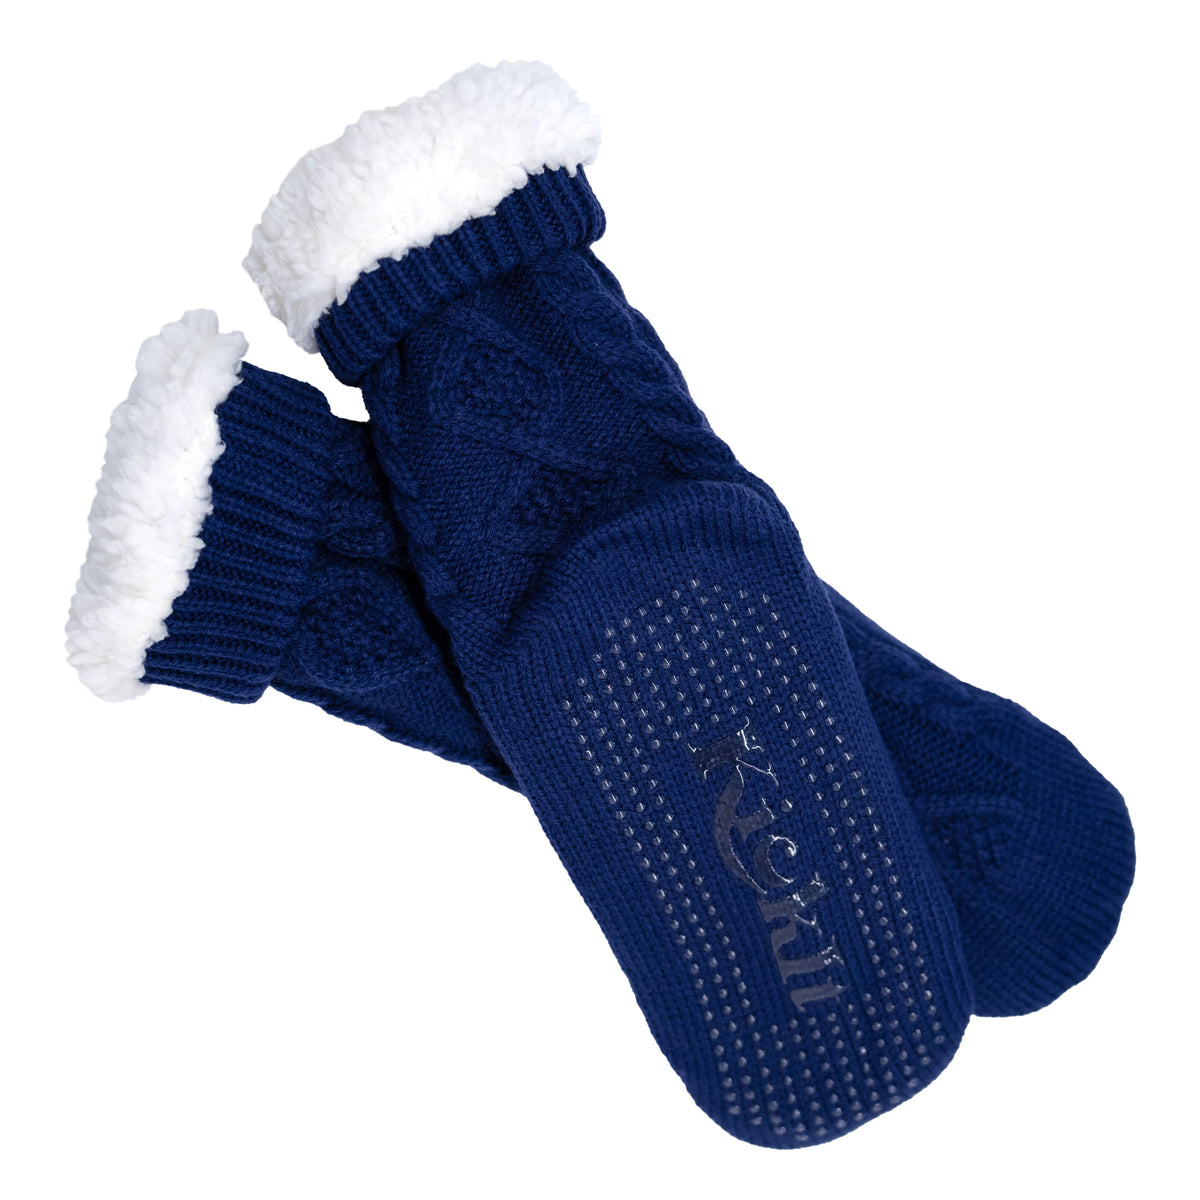 KickIt Hospital Socks  Fleece-Lined Socks with No-Skid Bottom